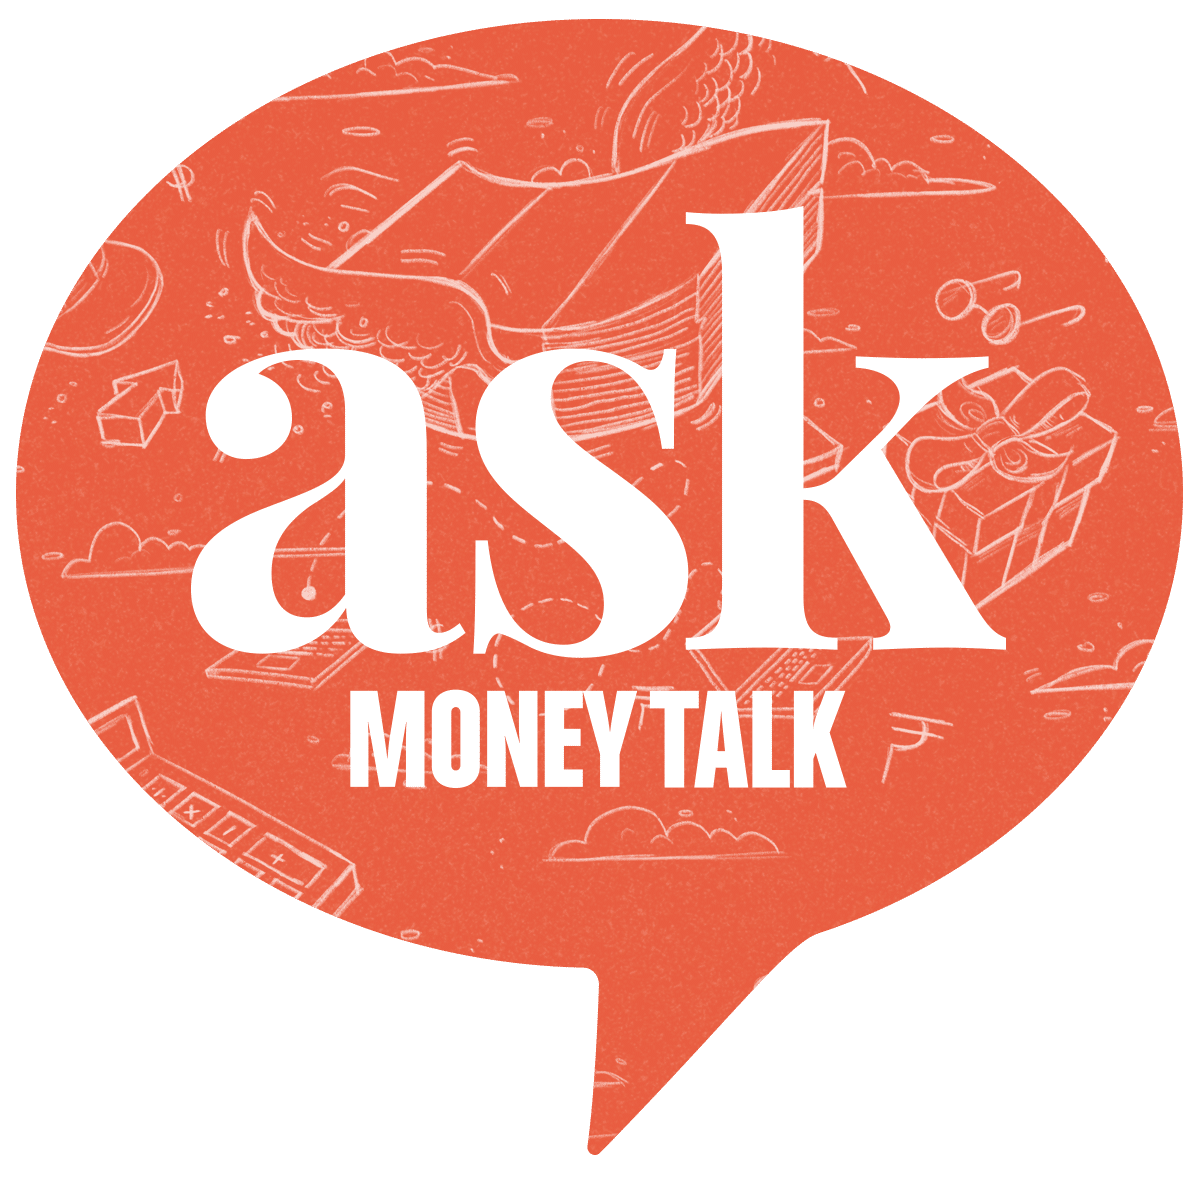 A graphic illustration of the MoneyTalk logo